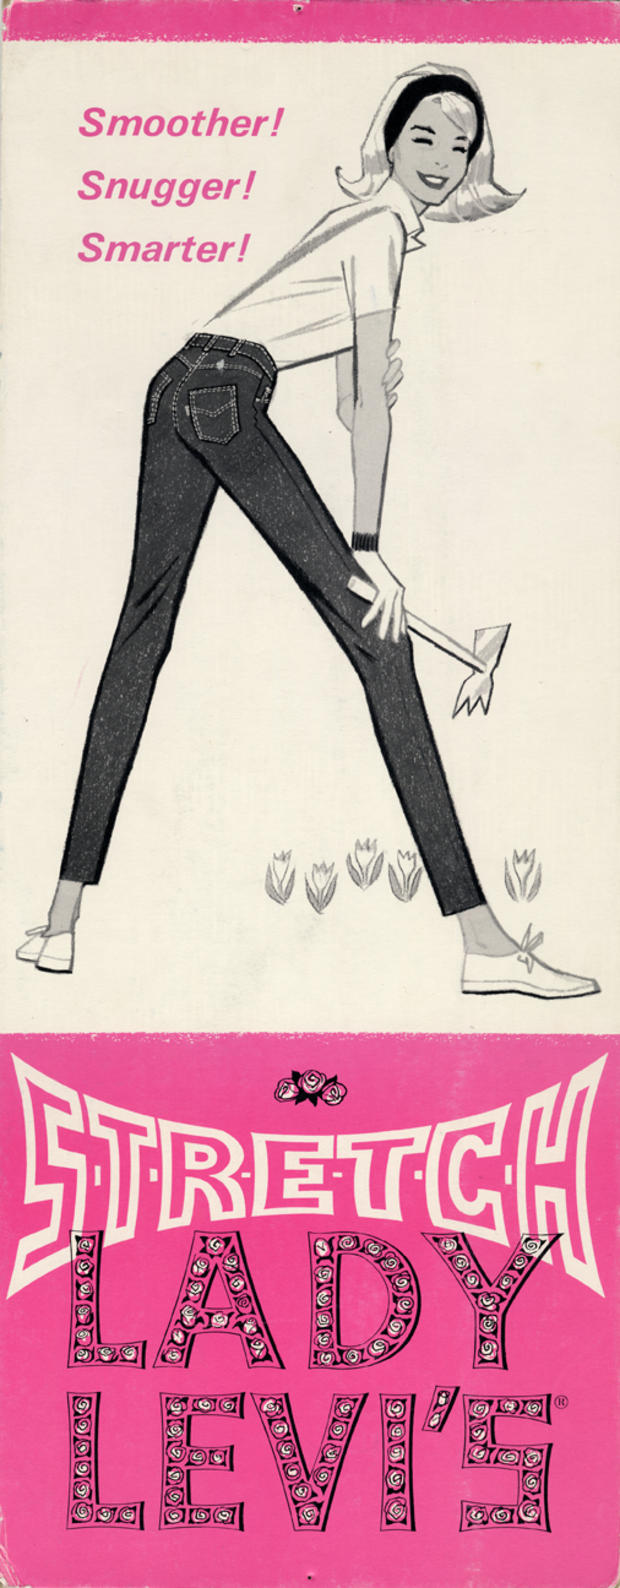 1963-counter-card.jpg 